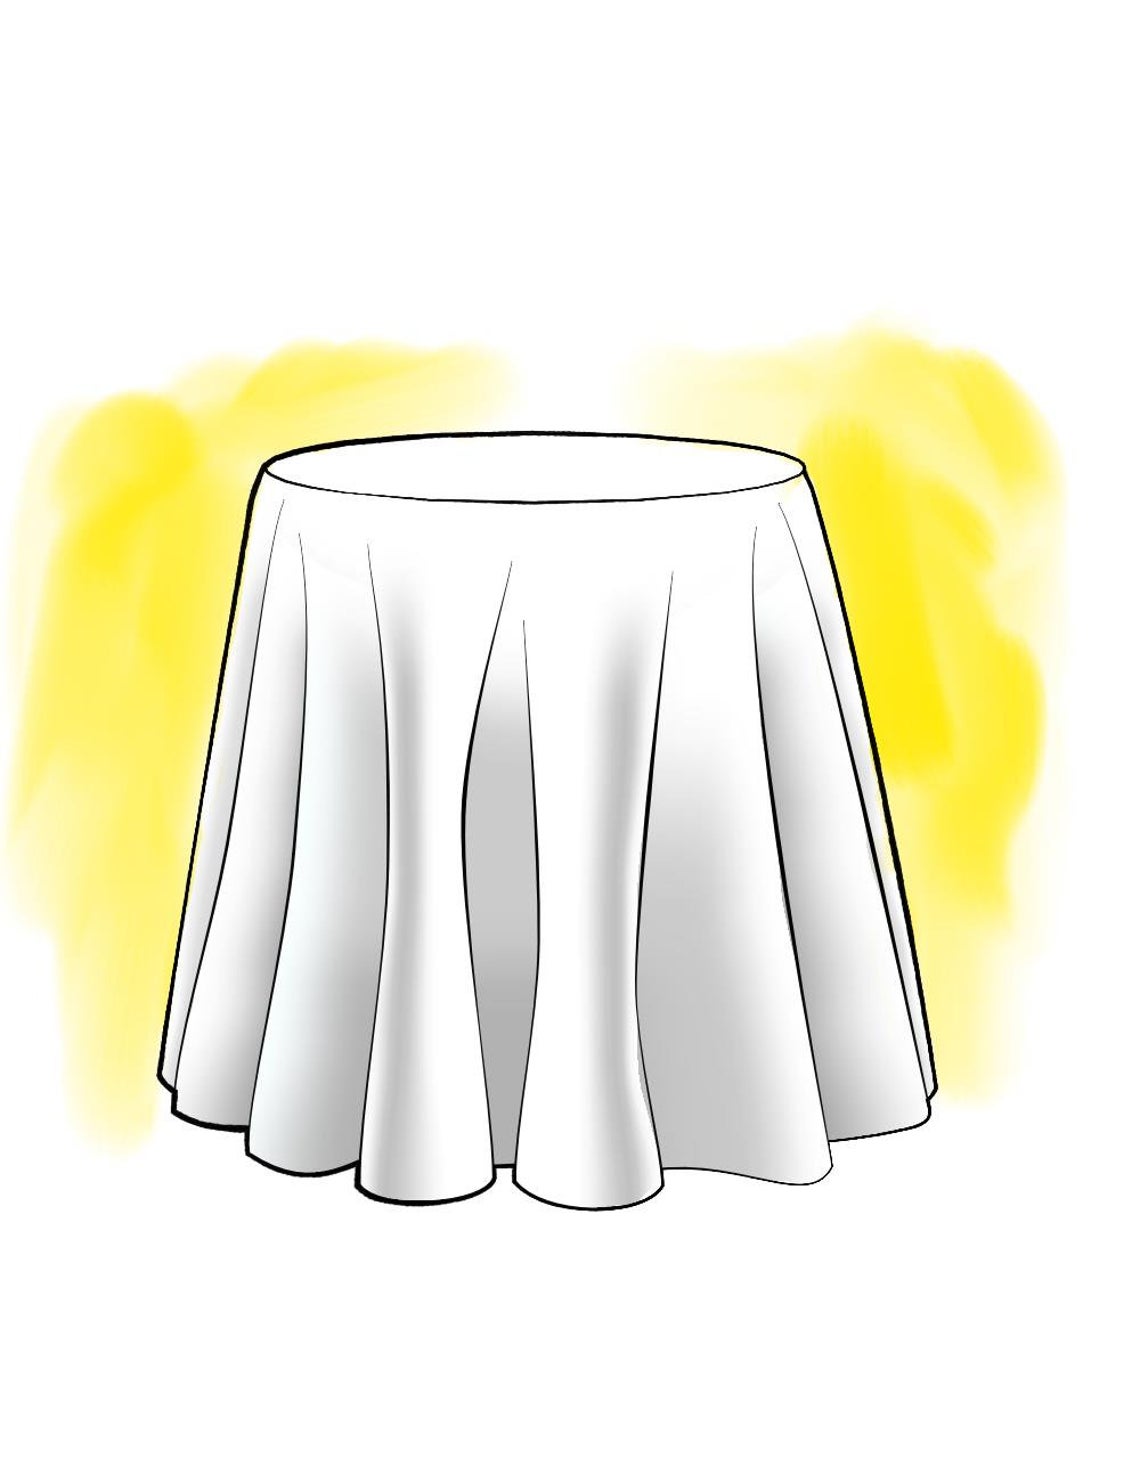 round tablecloth in farrah blush floral